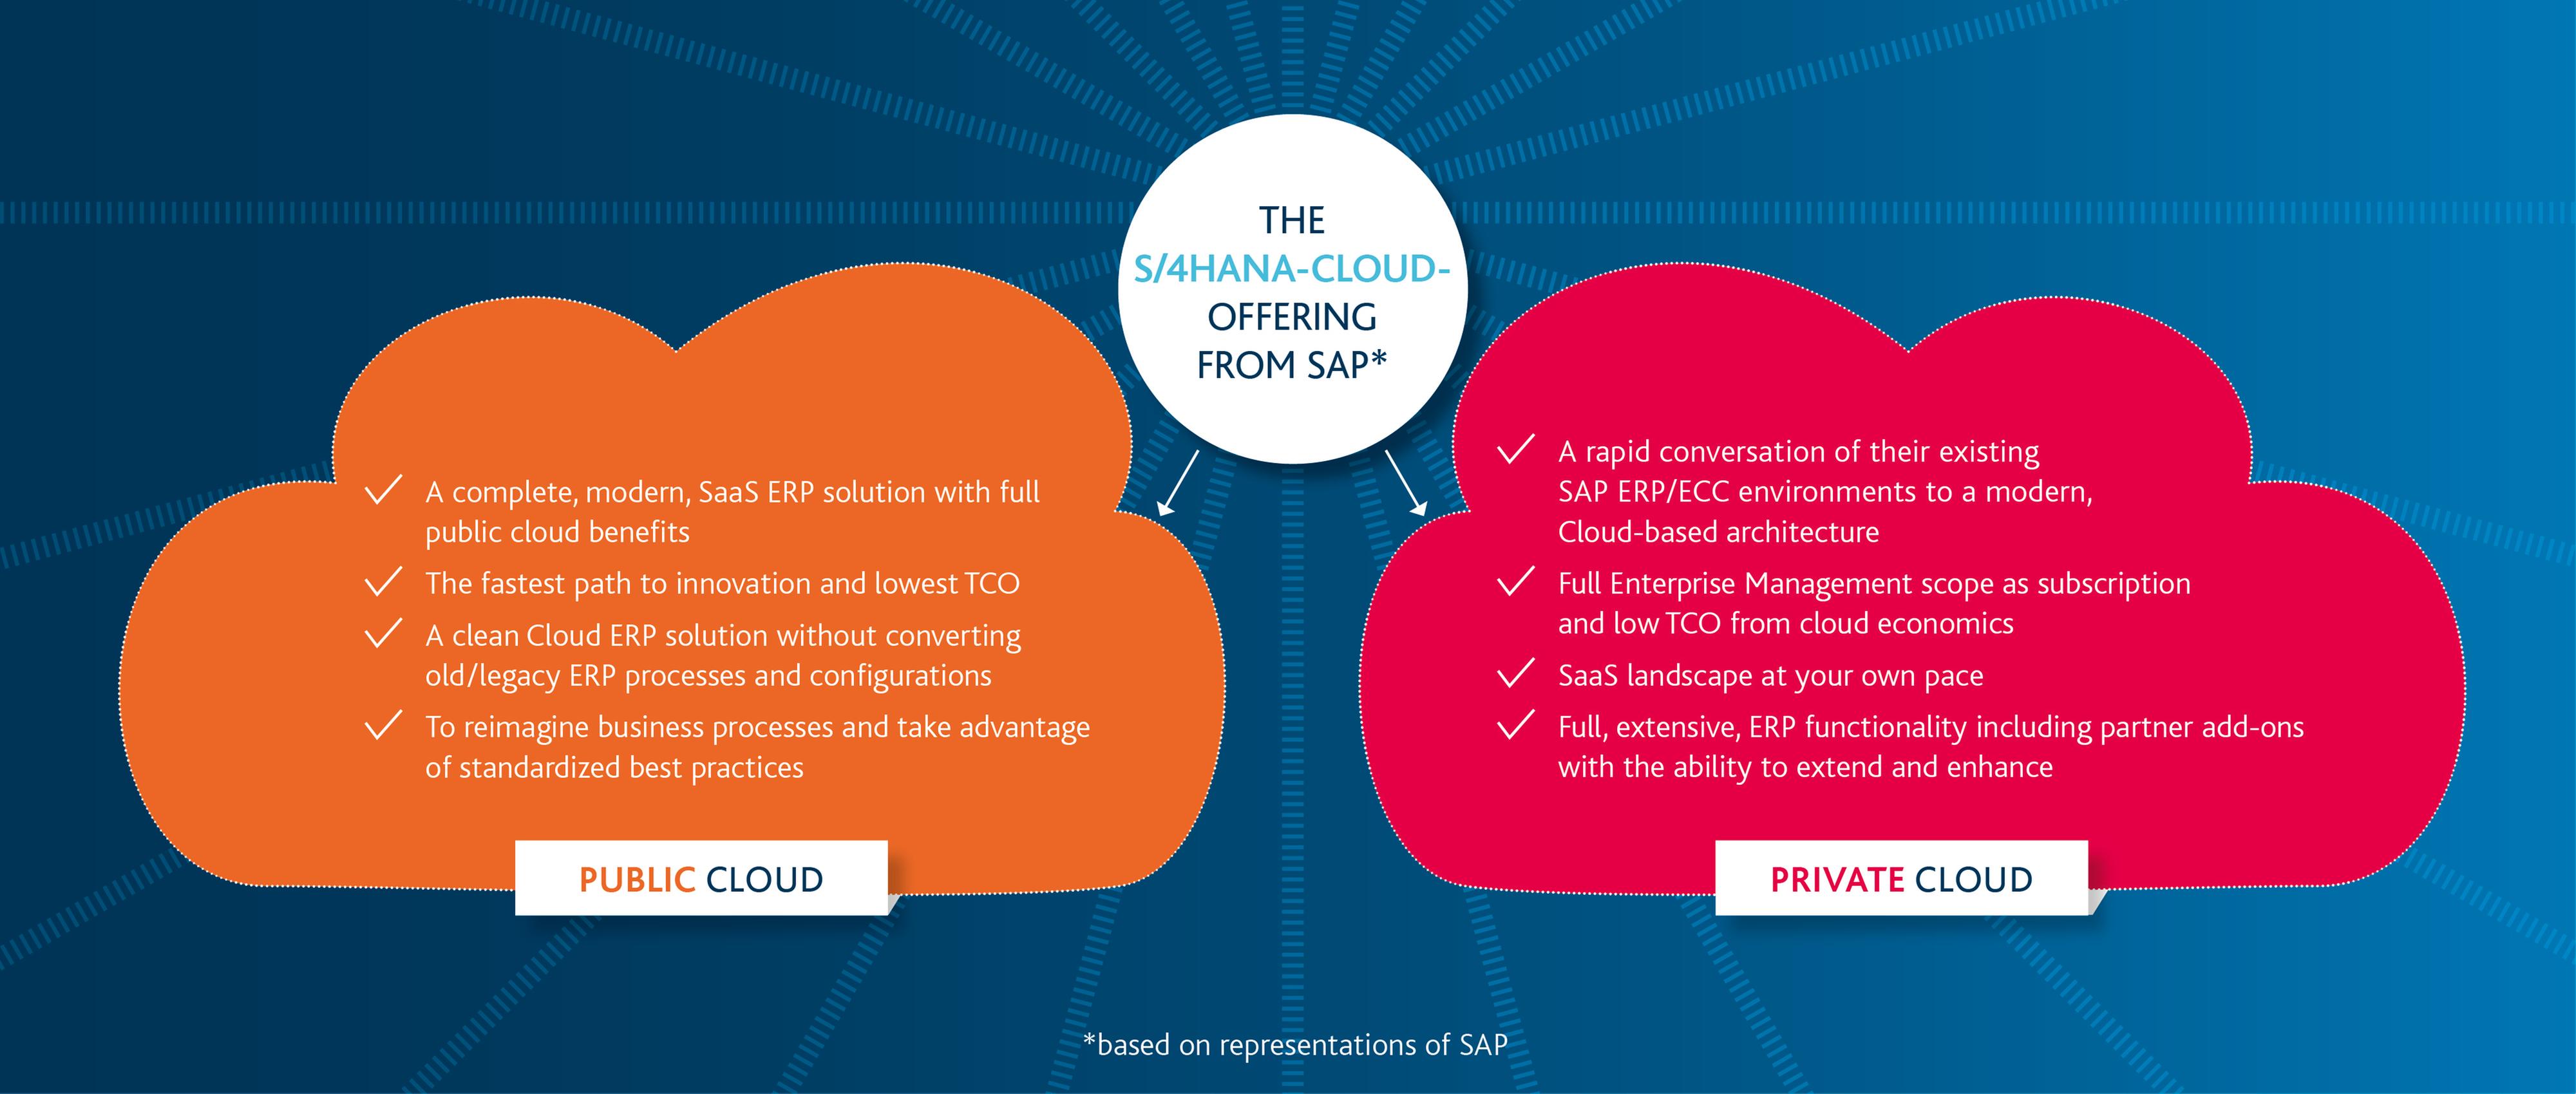 S/4HANA Cloud Offering from SAP 